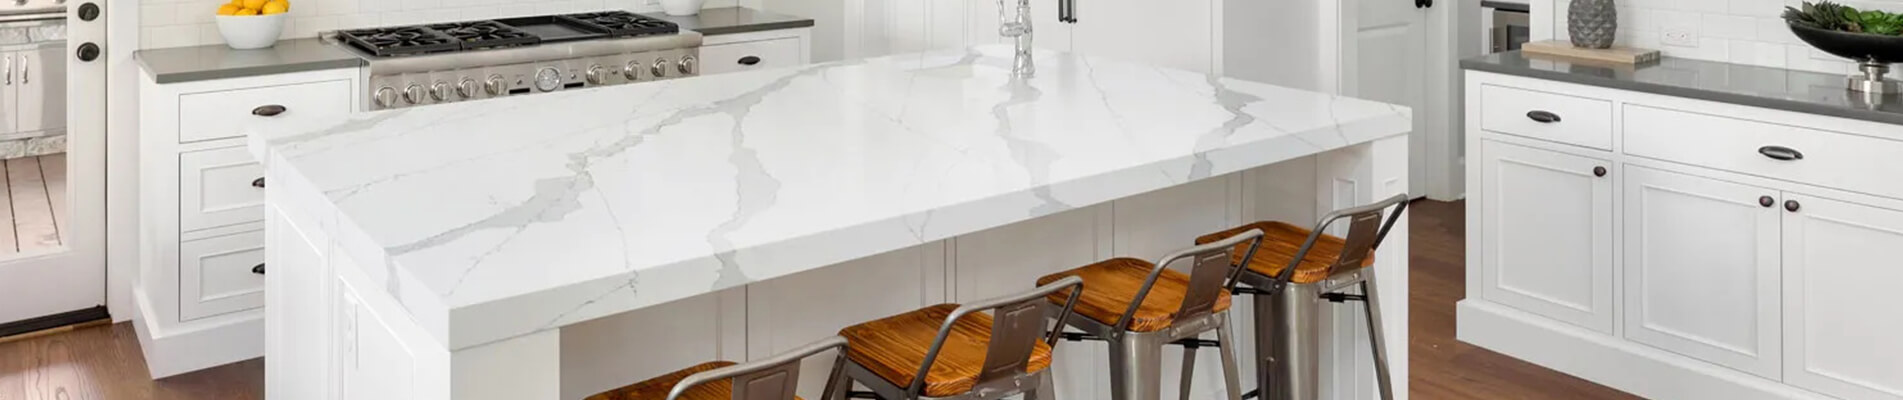 Sintered Stone Kitchen Countertop